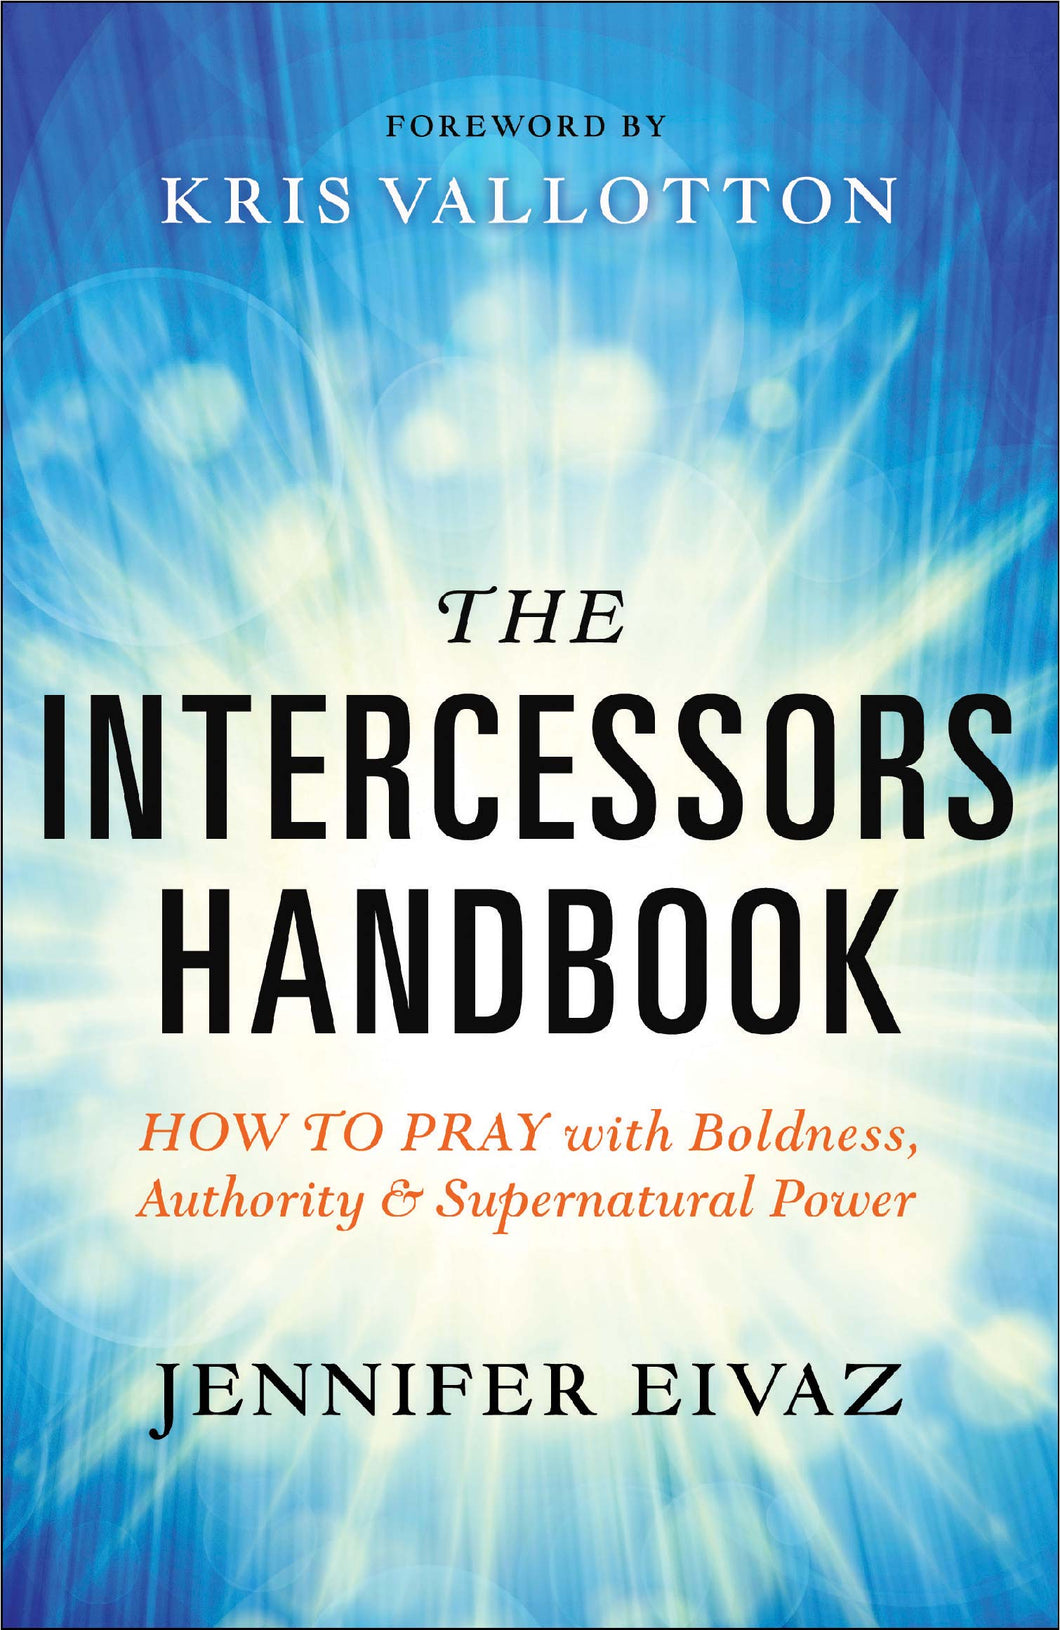 The Intercessor's Handbook